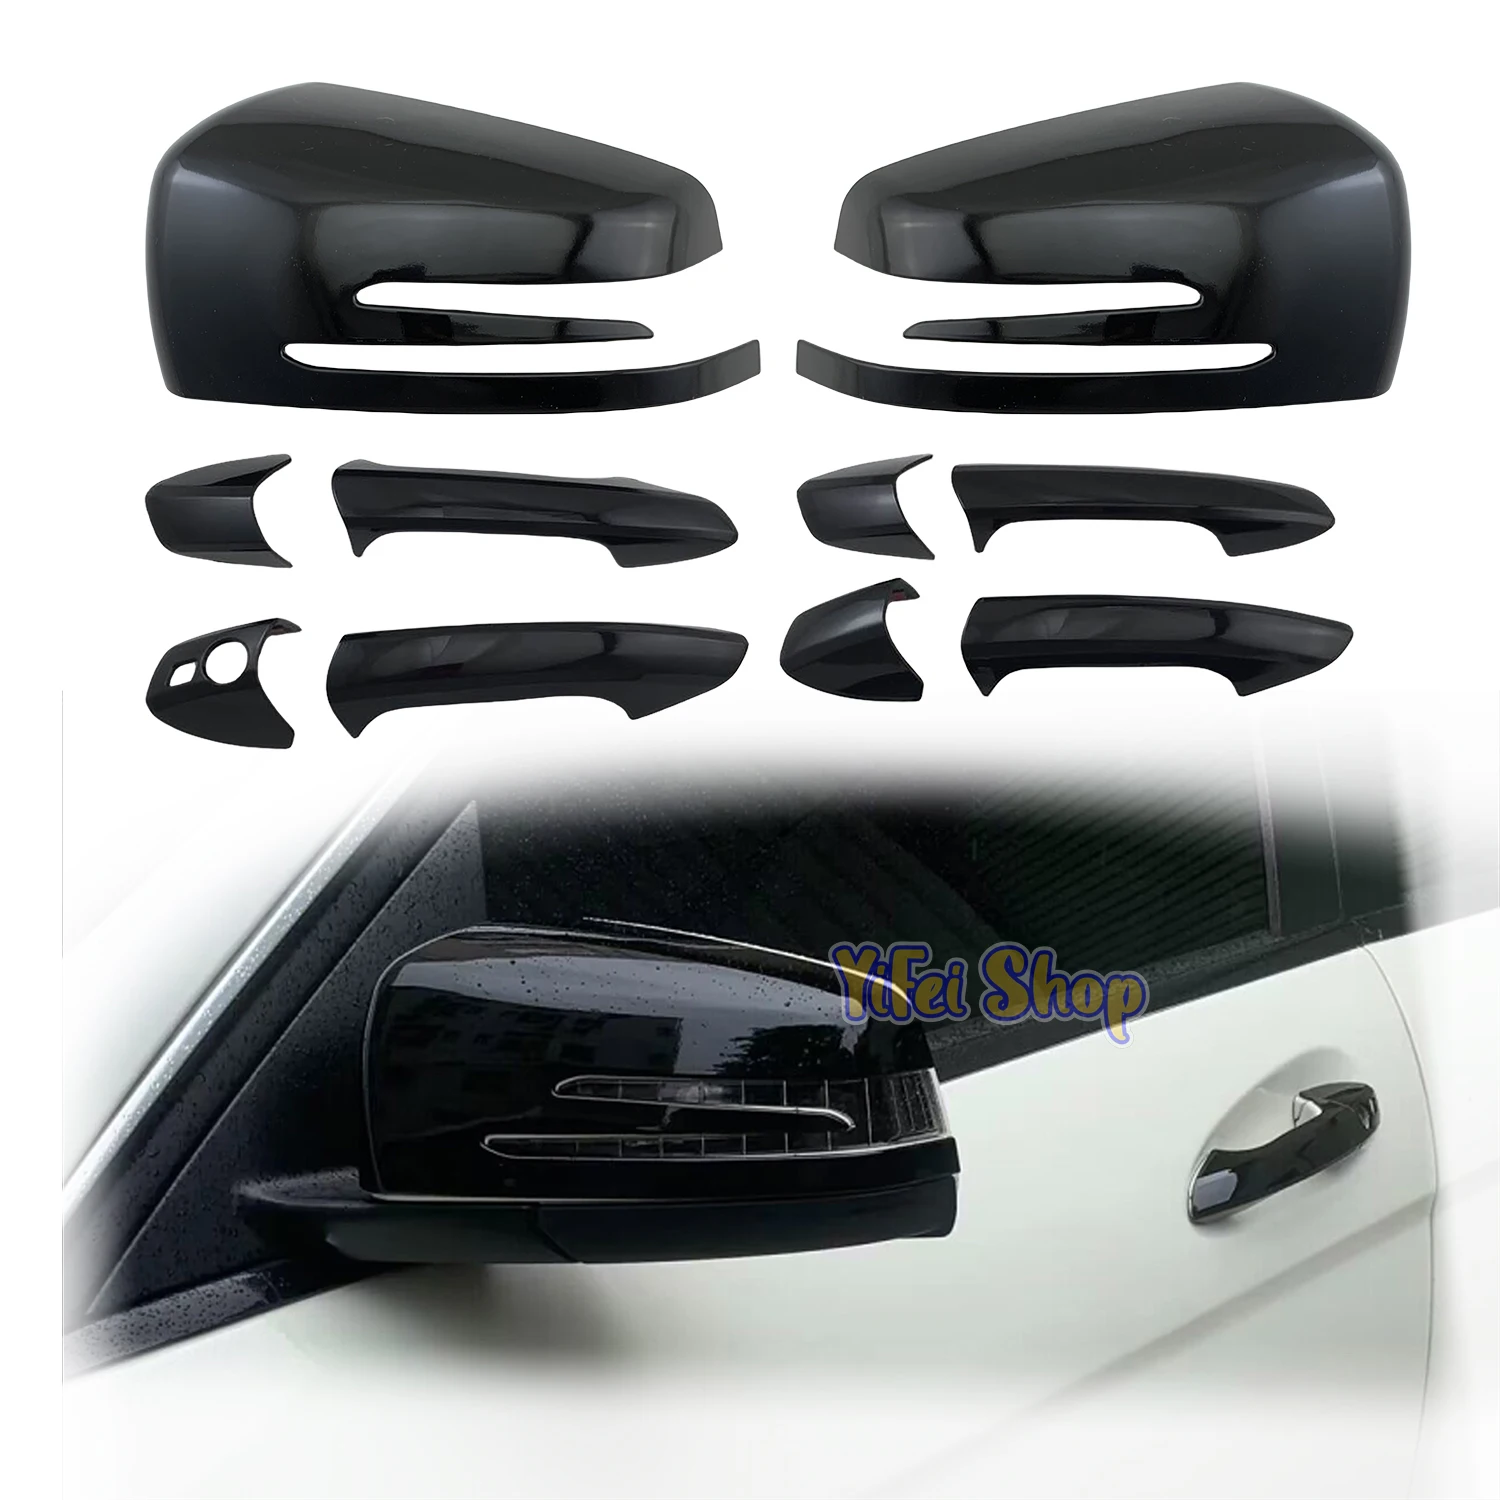 

Car Black Rearview Accessories Door Mirror Cover Handle Trim For Mercedes Benz A B C E S CLA GLA GLK CLS Class W176 W204 W117